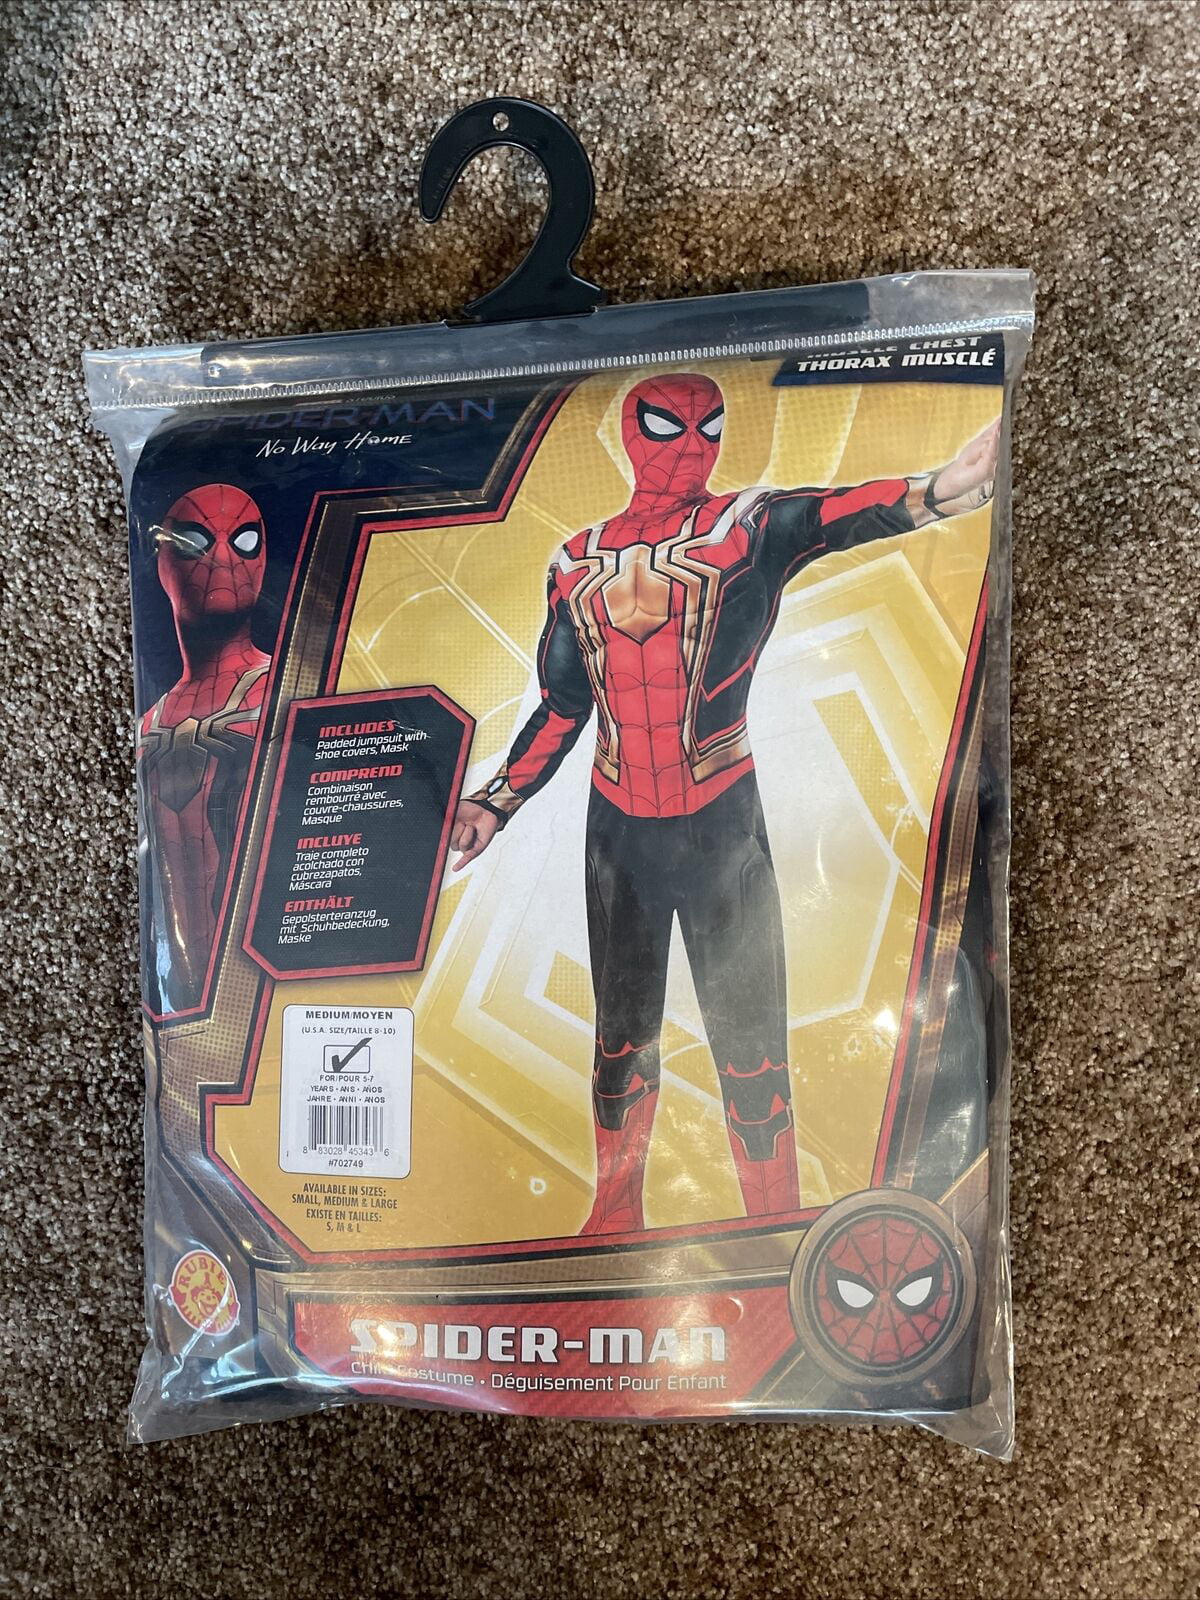 Rubies - Costume Spiderman - Costume Iron Spider Enfant - bleu